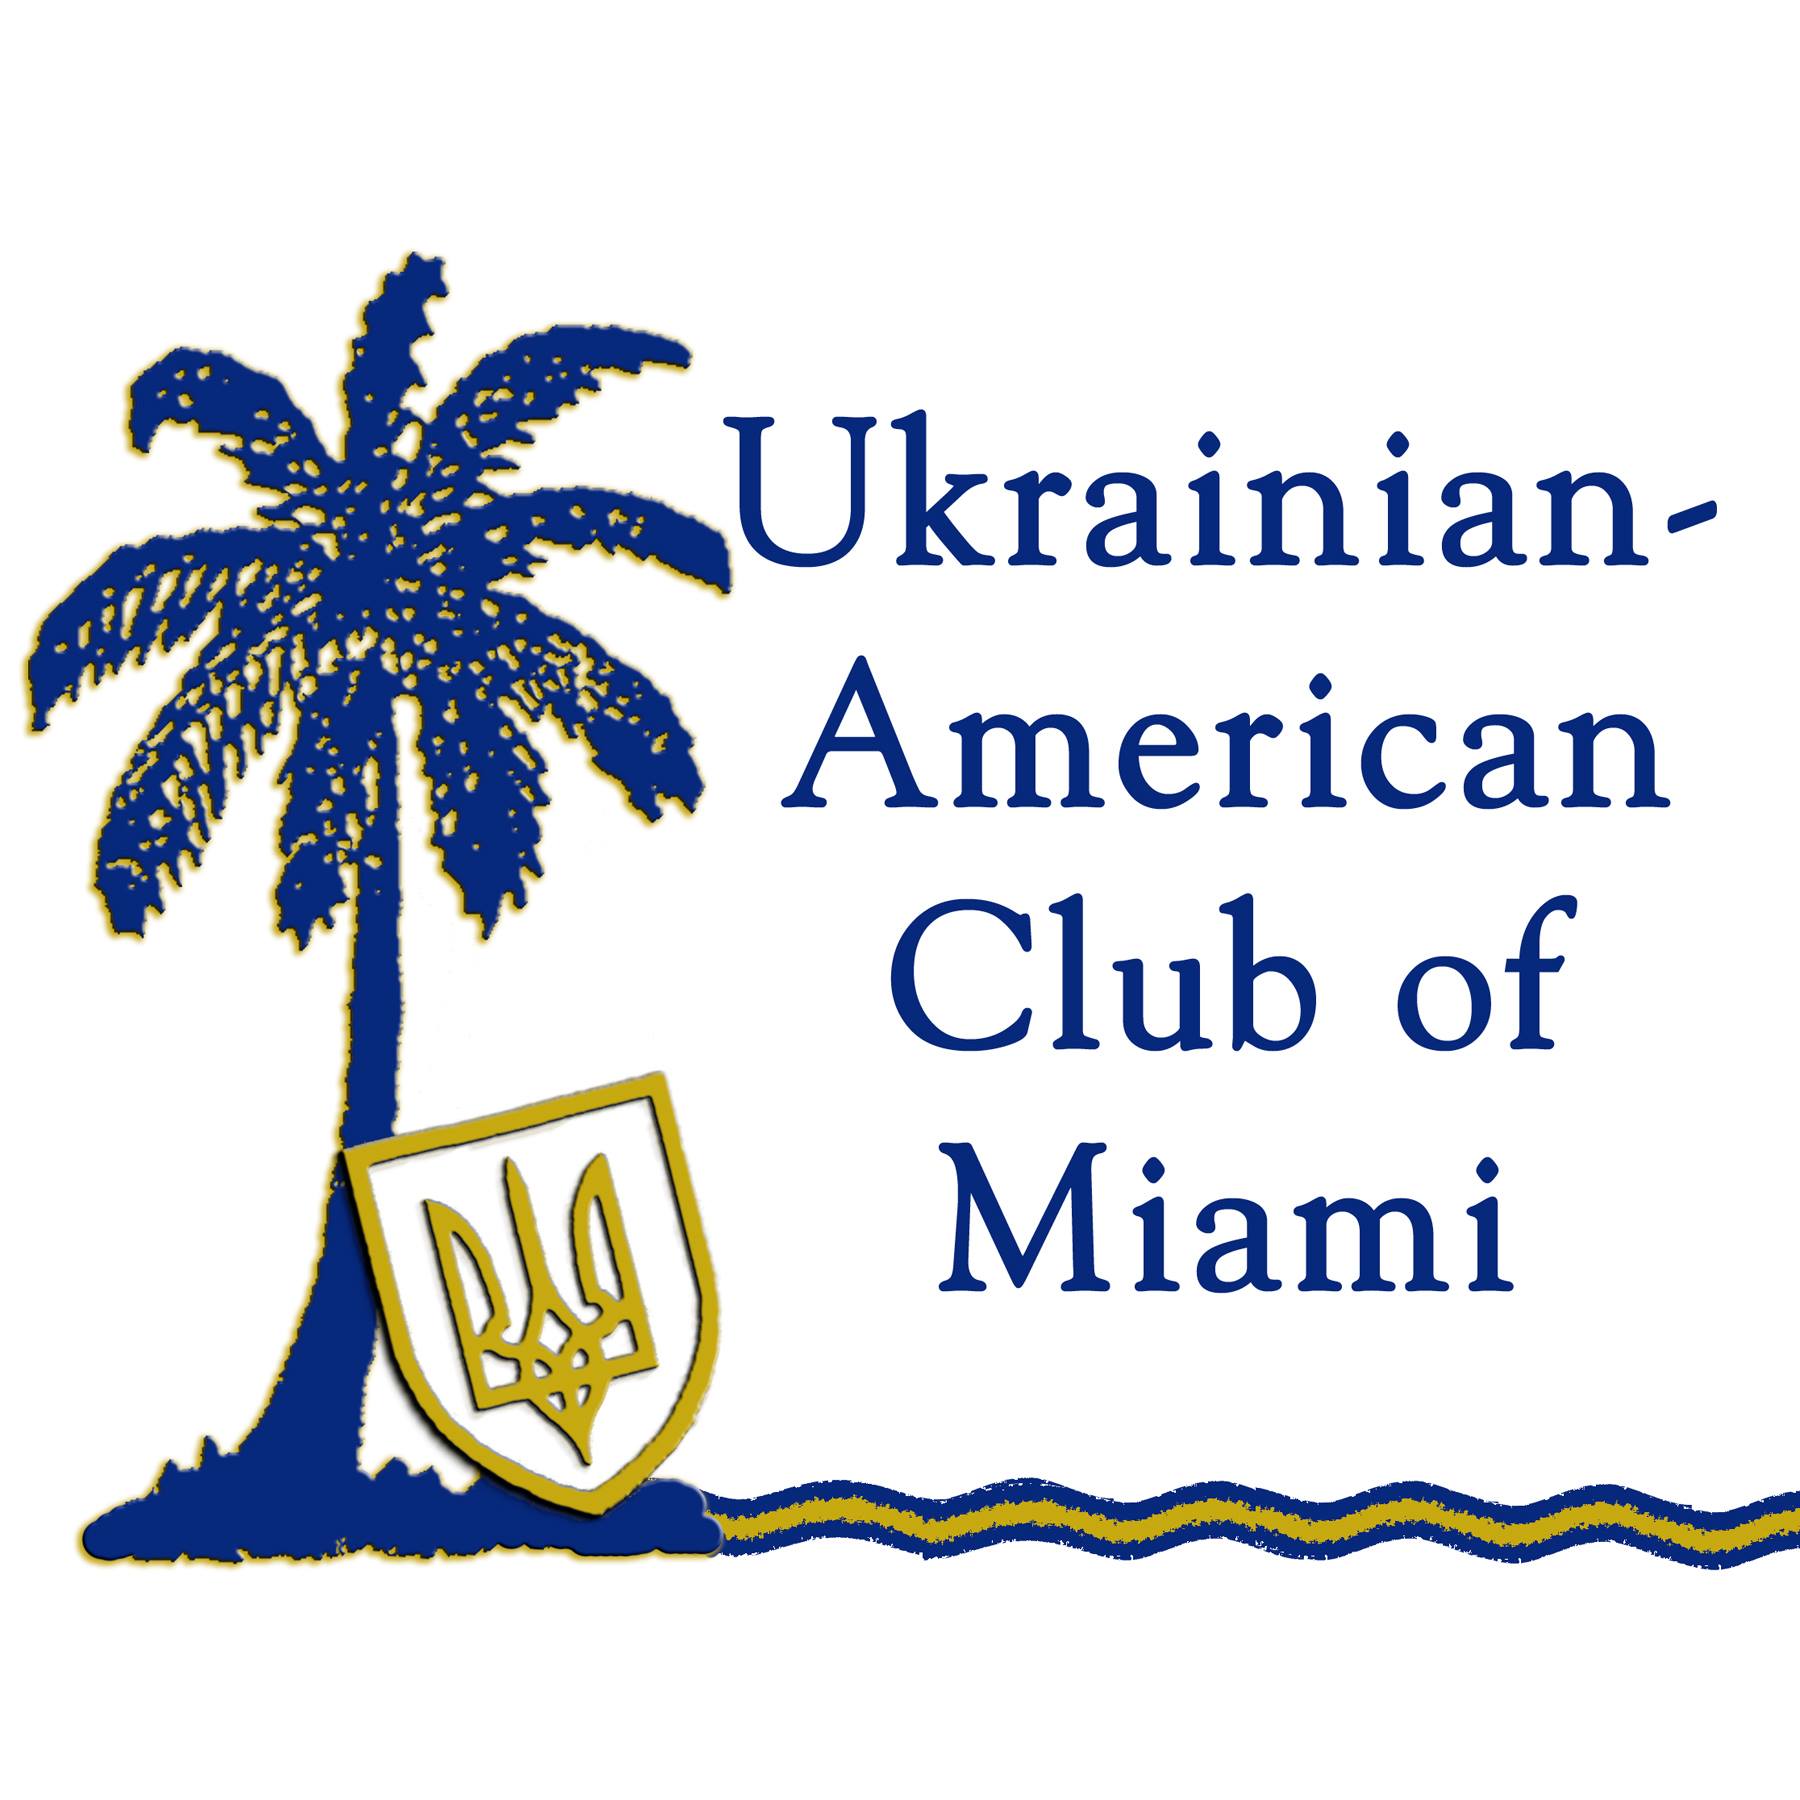 Ukrainian Organizations in Florida - Ukrainian American Club of Miami